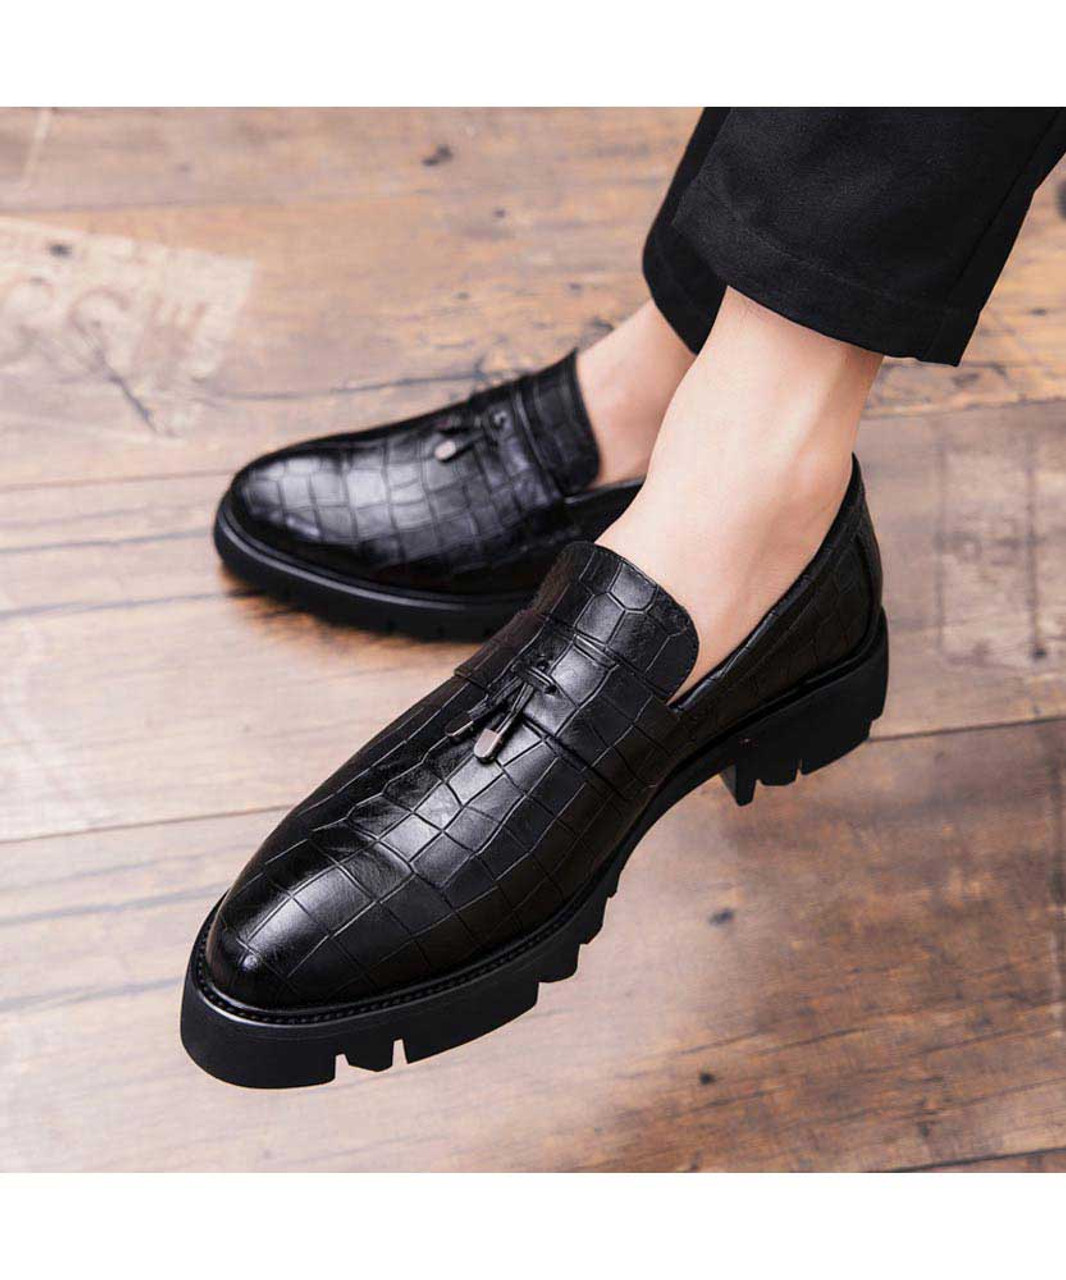 Black check leather slip on dress shoe with tassel | Mens dress shoes ...